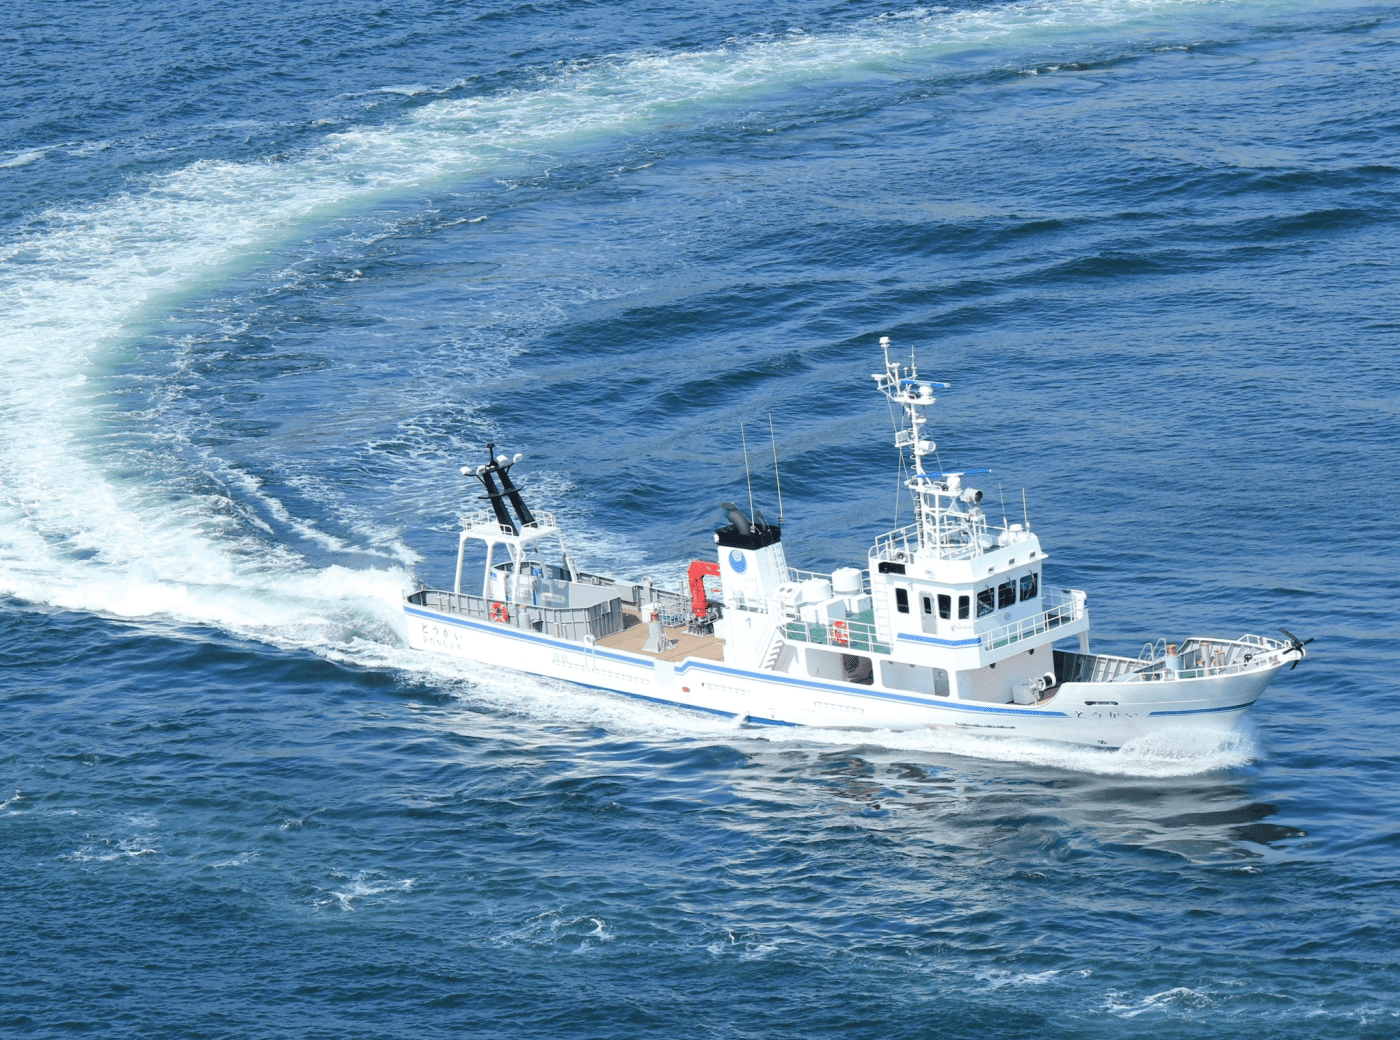 Government vessel